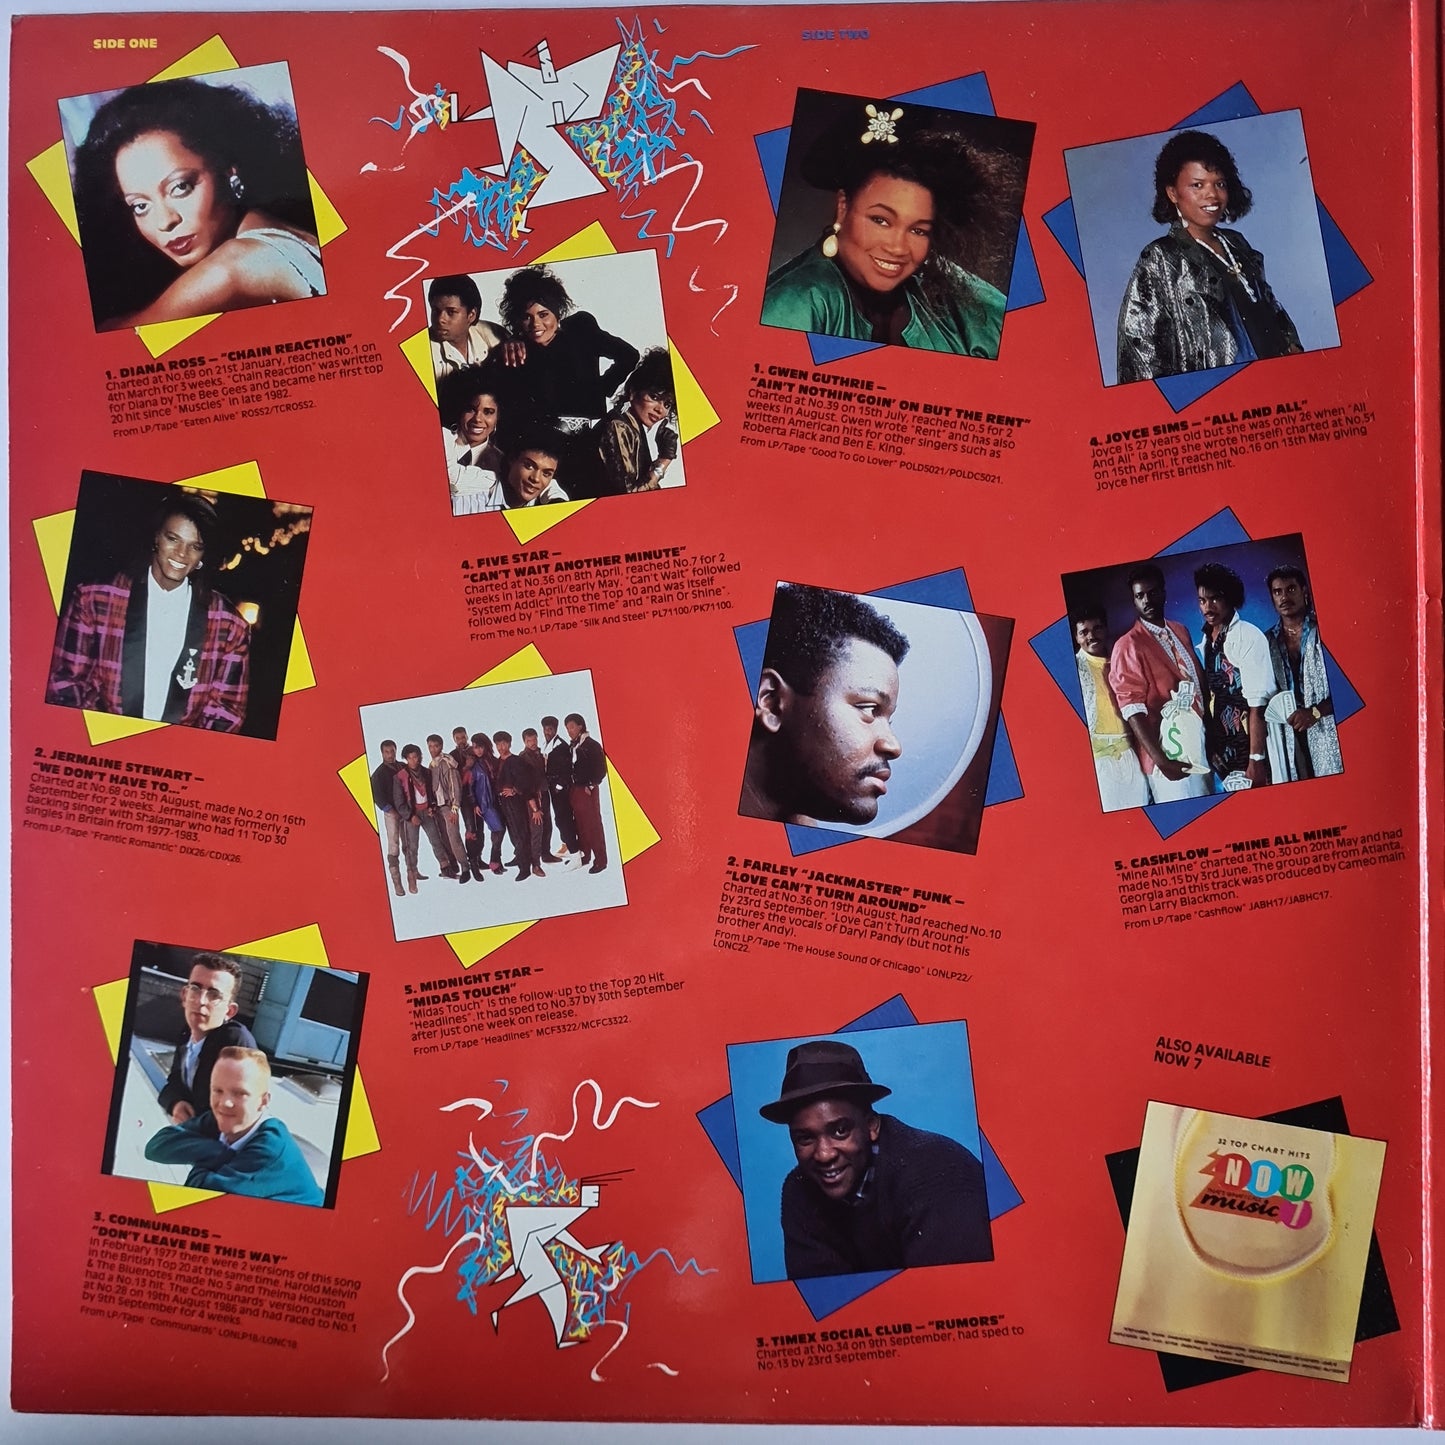 Various Artists/Hits album - Now Dance 86: The 12" Mixes - 1986 (2LP gatefold) - Vinyl Record